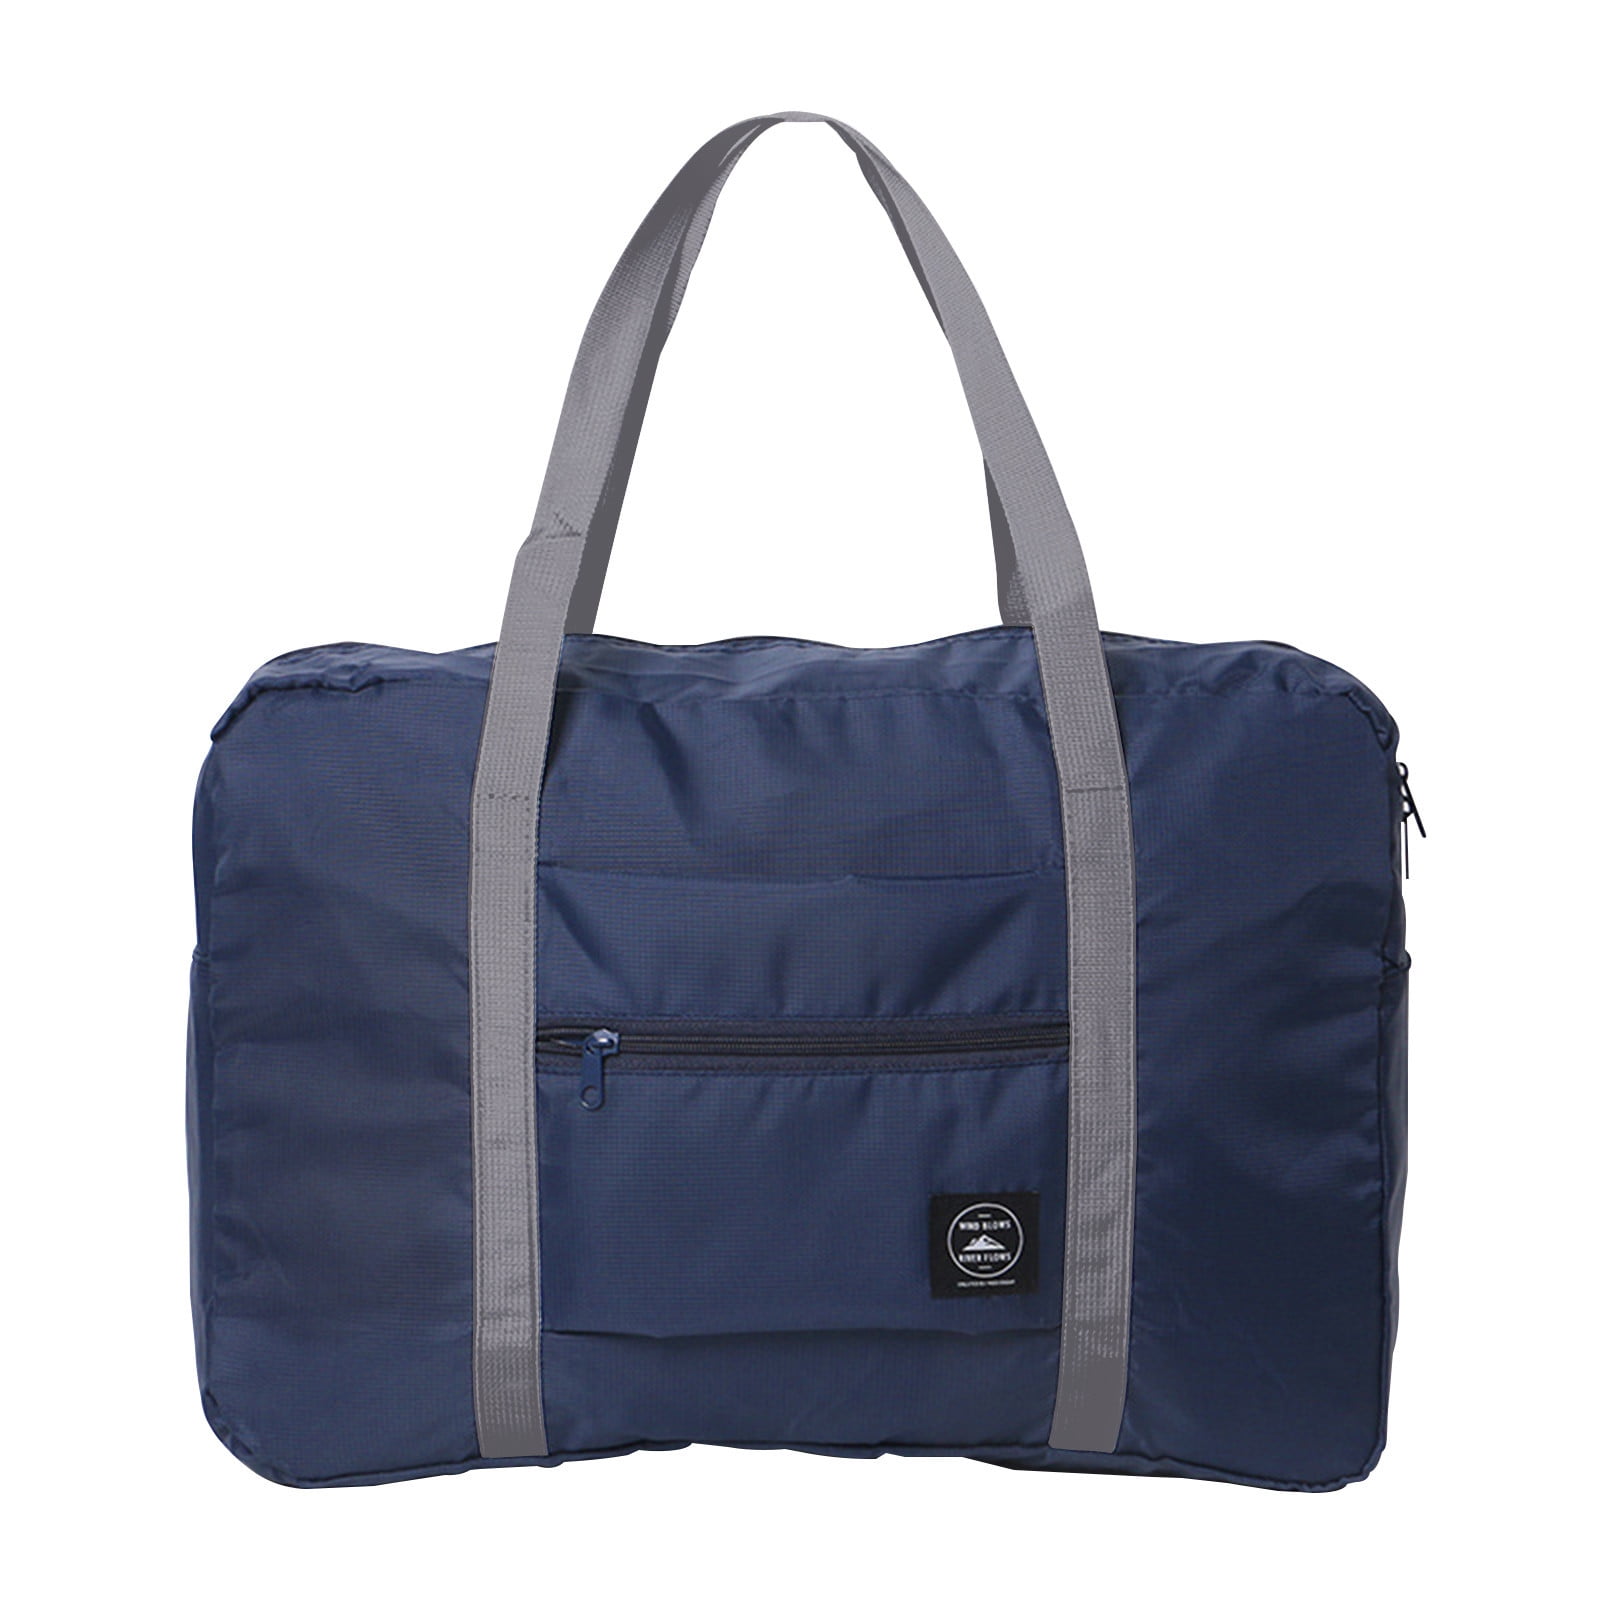 lulshou Organization and Storage,Foldable Travel Duffel Bag Tote Carry ...